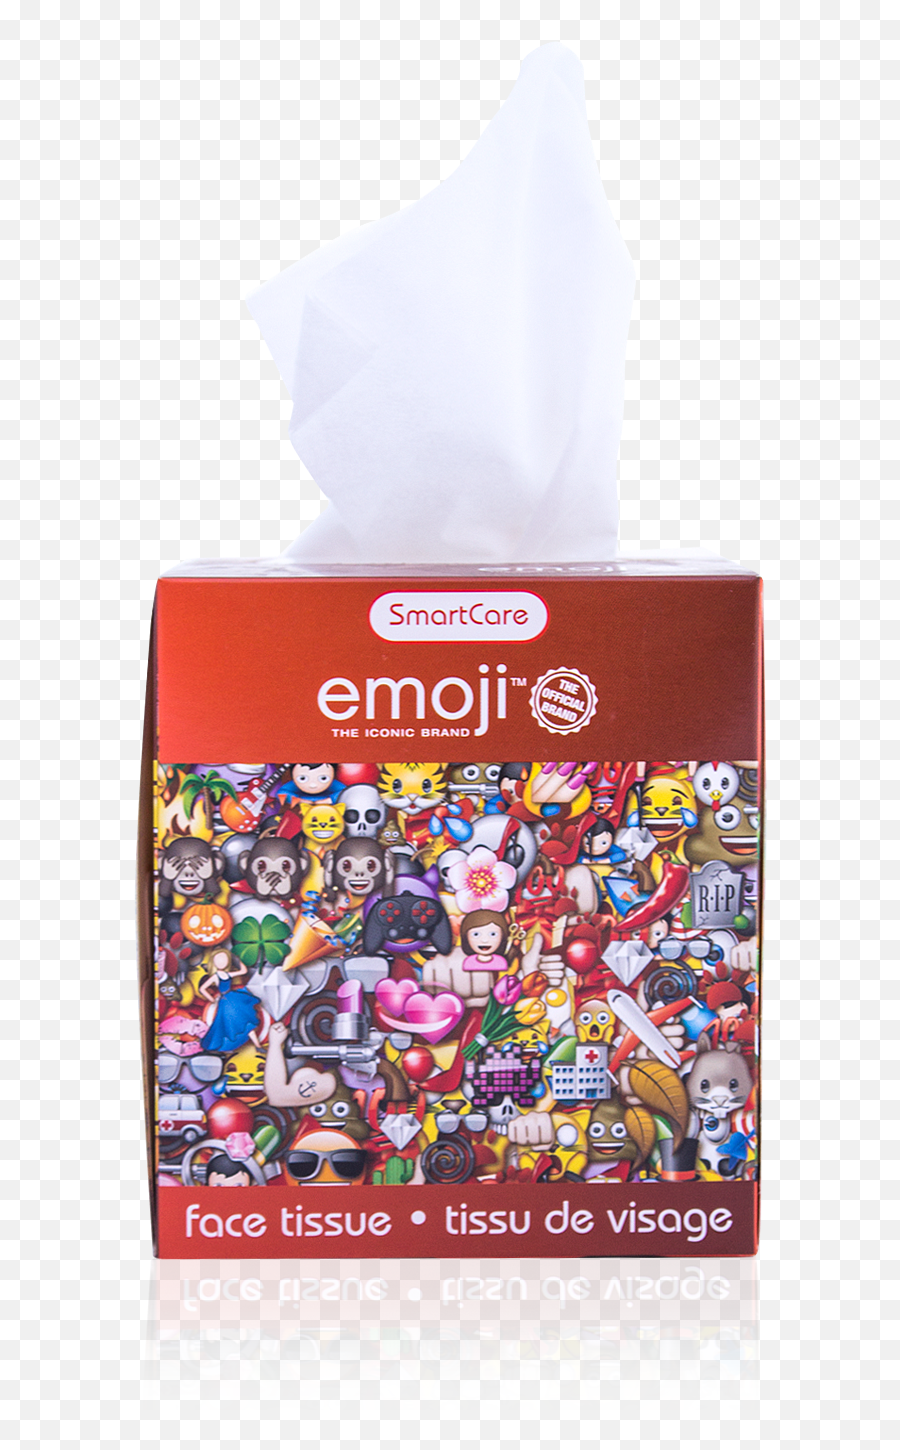 Smart Care Emoji Tissue Box - Facial Tissue Png,Tissue Box Png